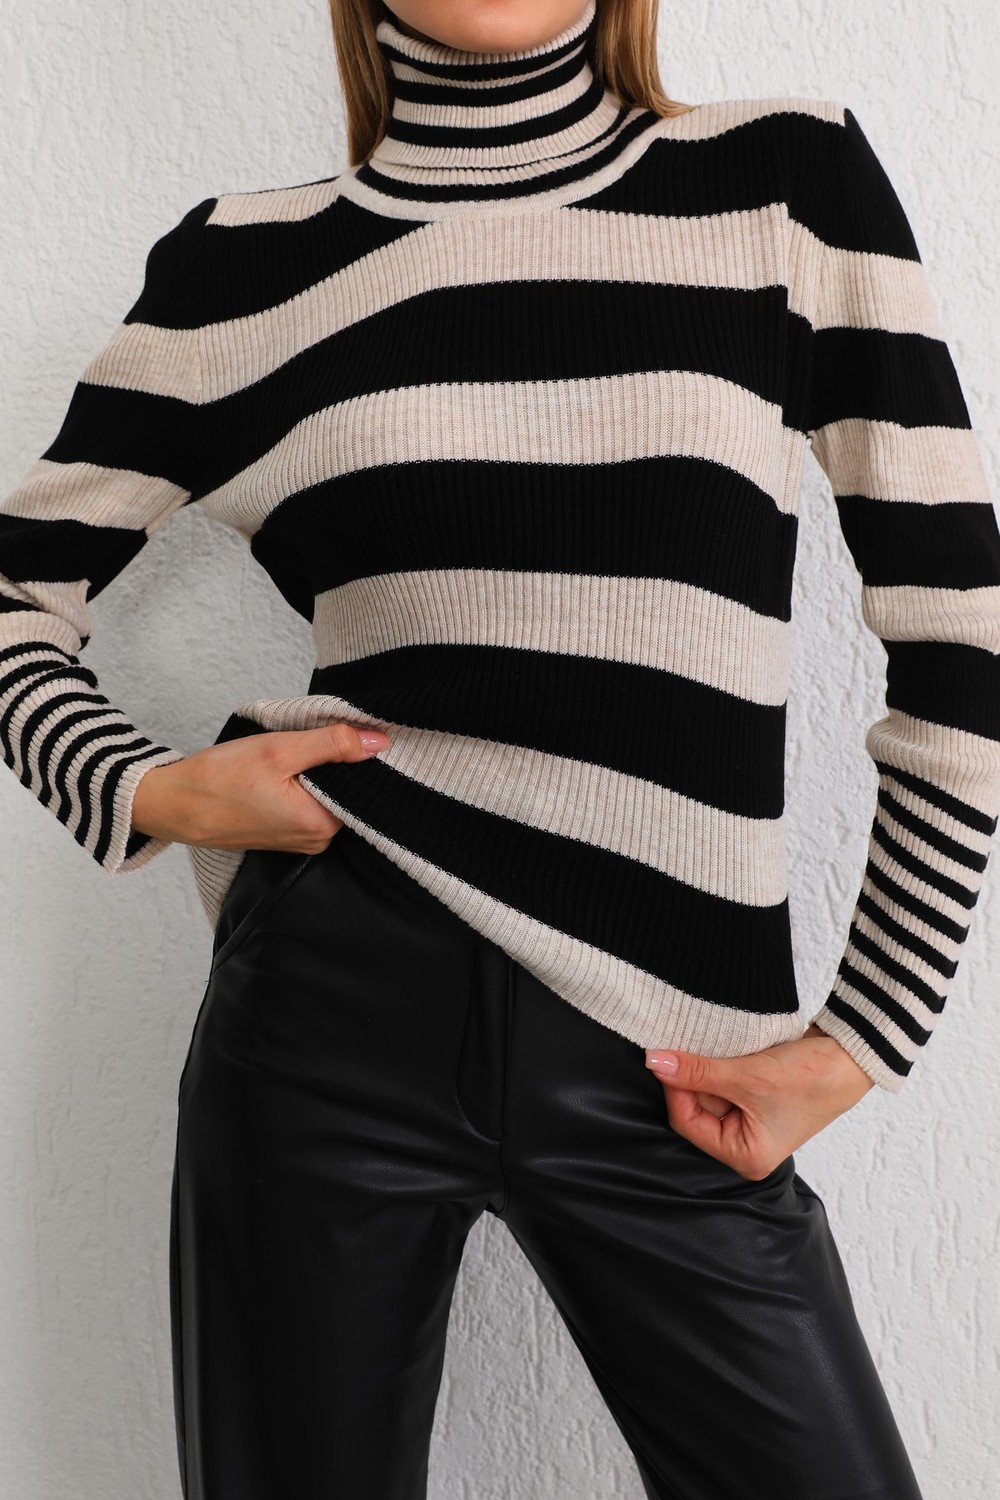 BİKELİFE Women's Stone Striped Soft Textured Lycra Basic Knitwear Sweater